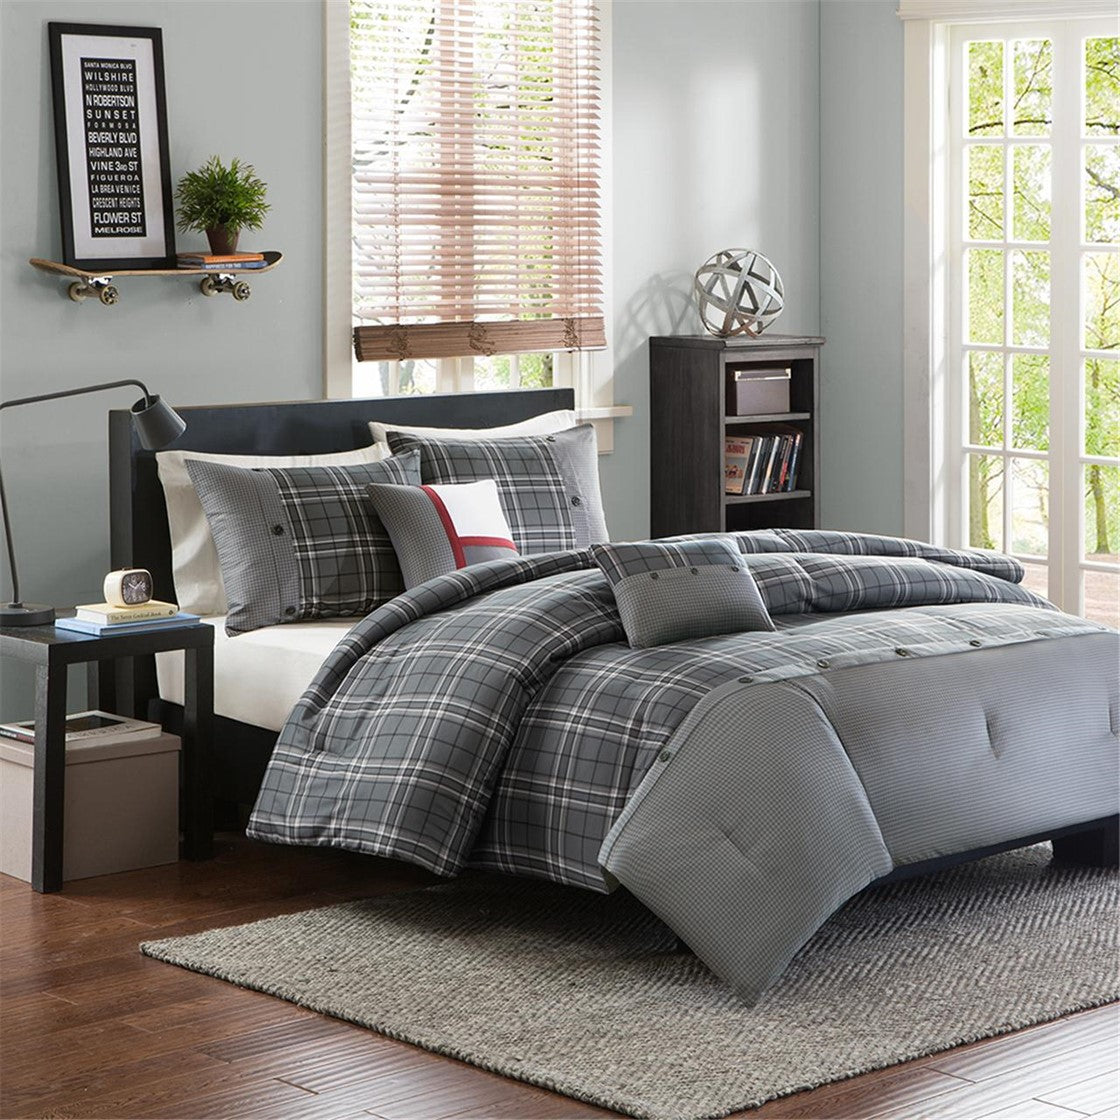 Intelligent Design Daryl Comforter Set - Grey - King Size / Cal King Size